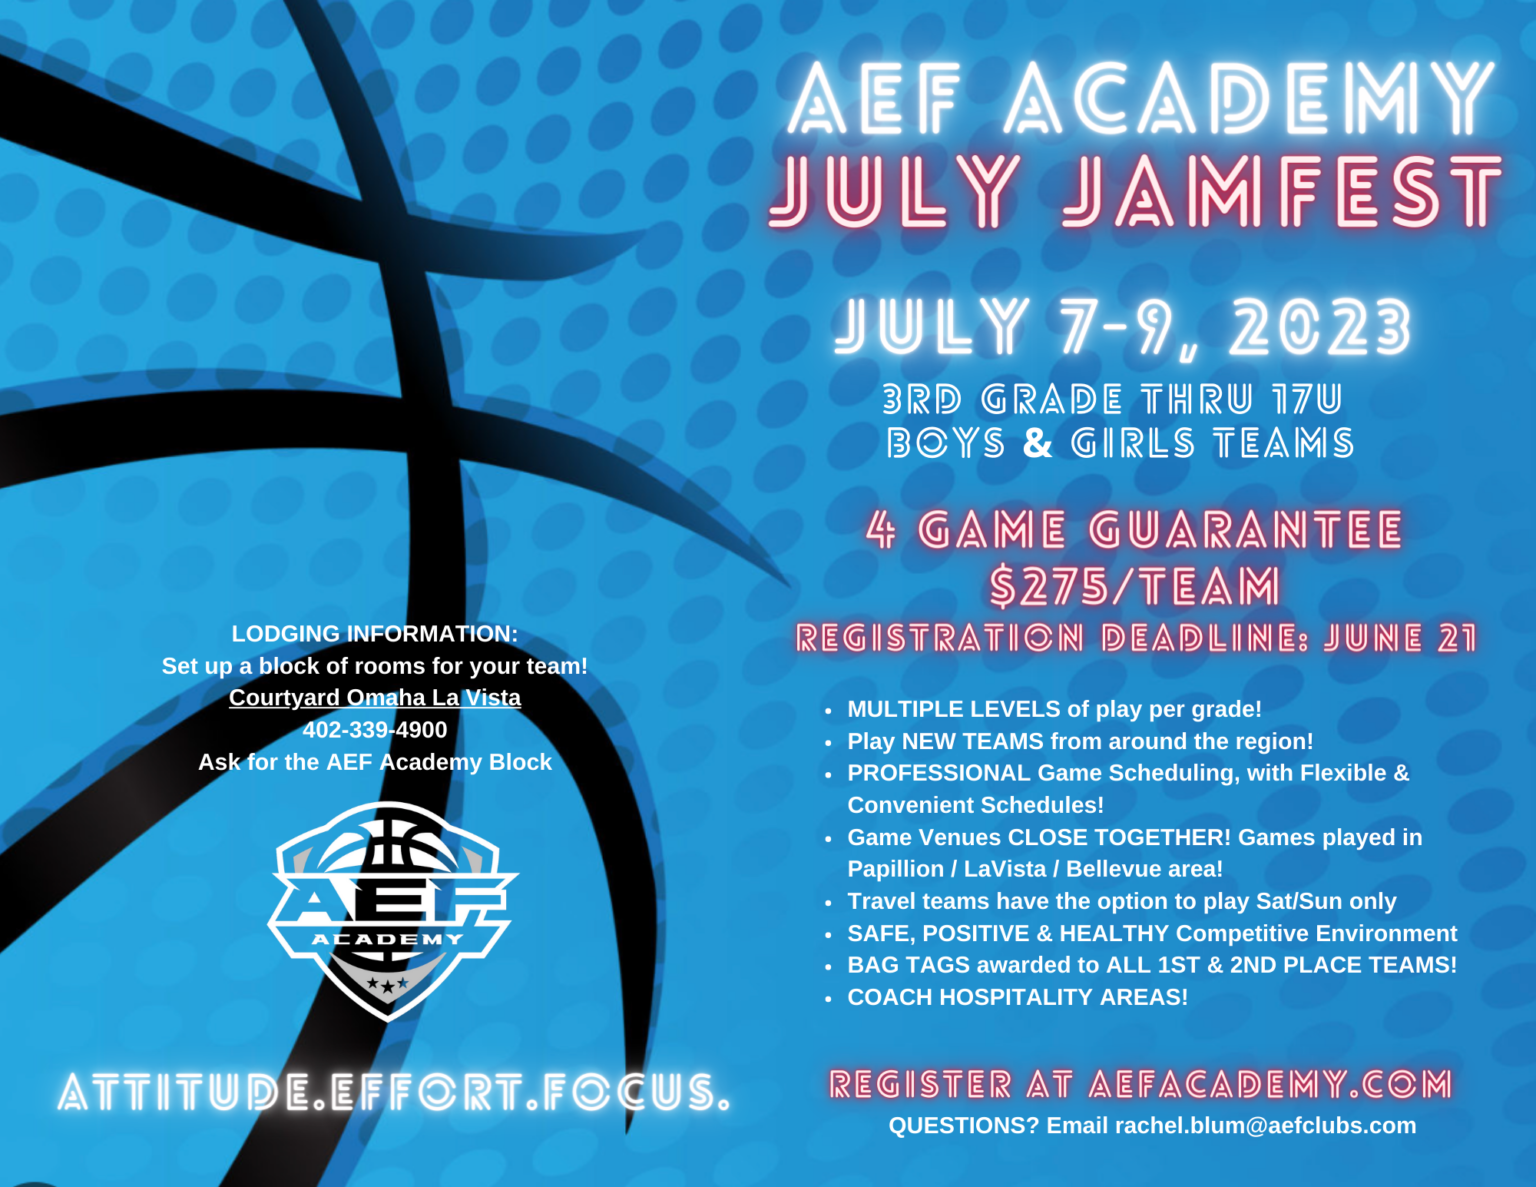 AEF ACADEMY JULY JAMFEST AEF Clubs